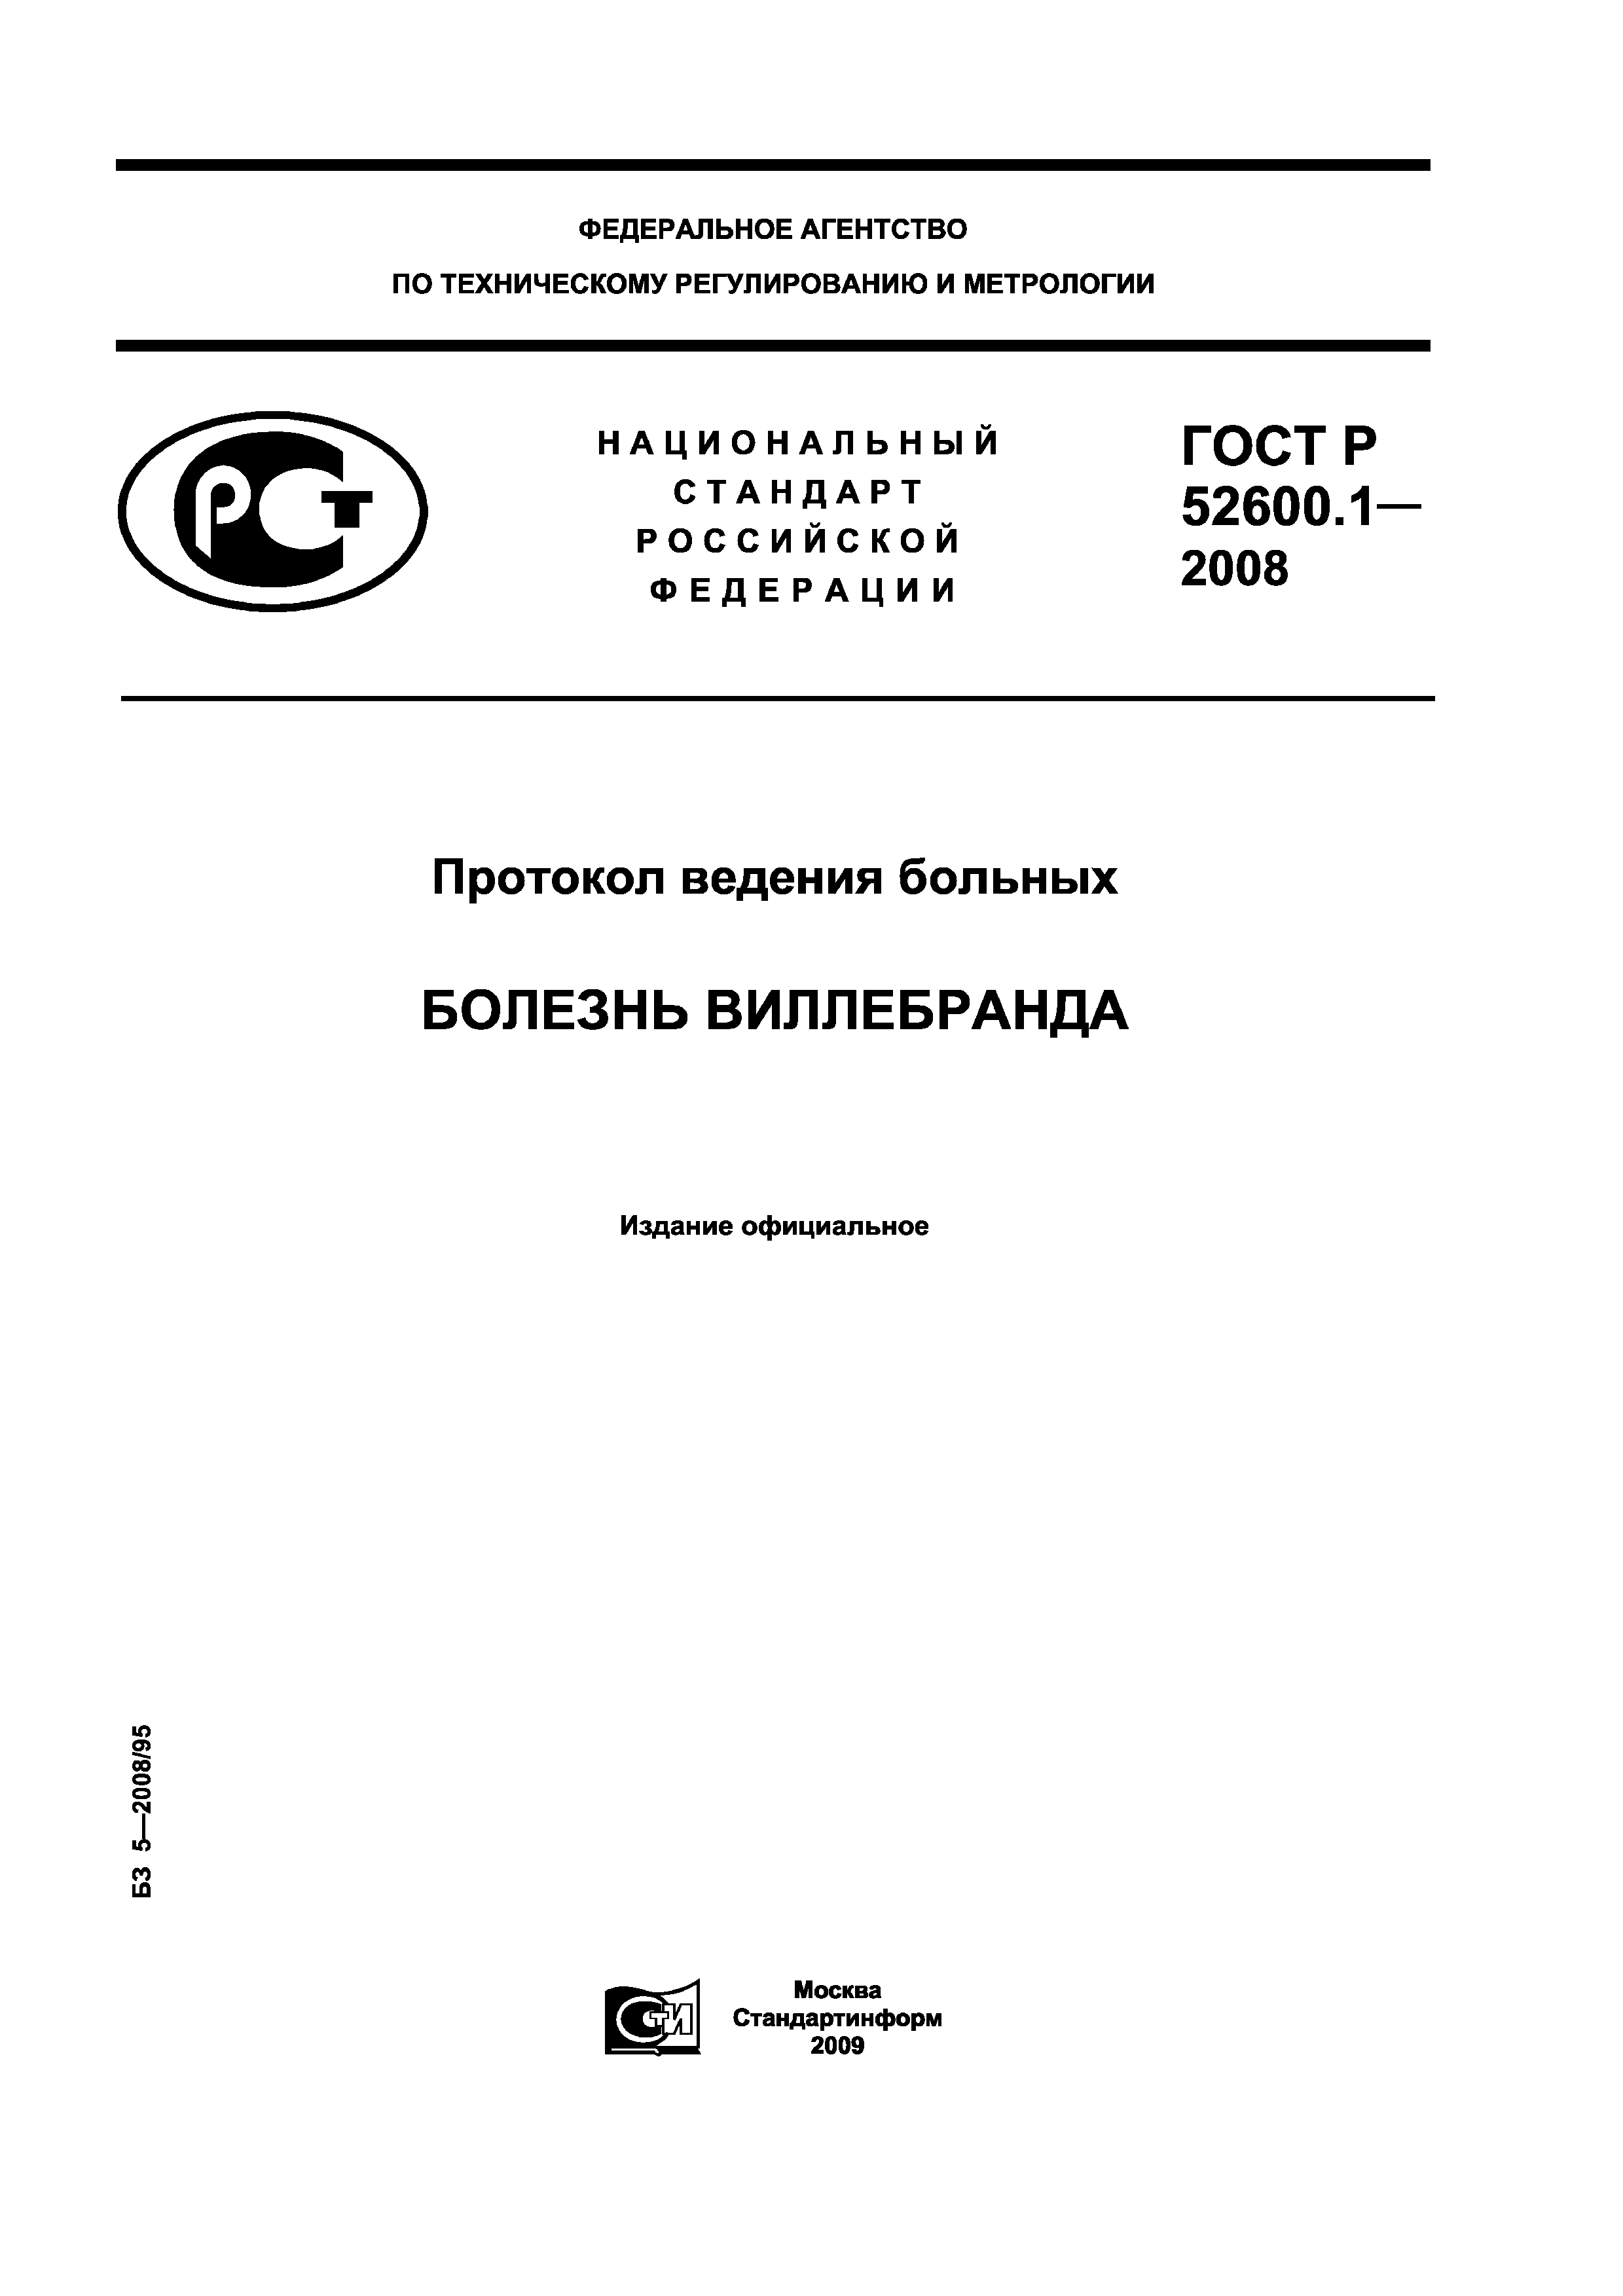 ГОСТ Р 52600.1-2008